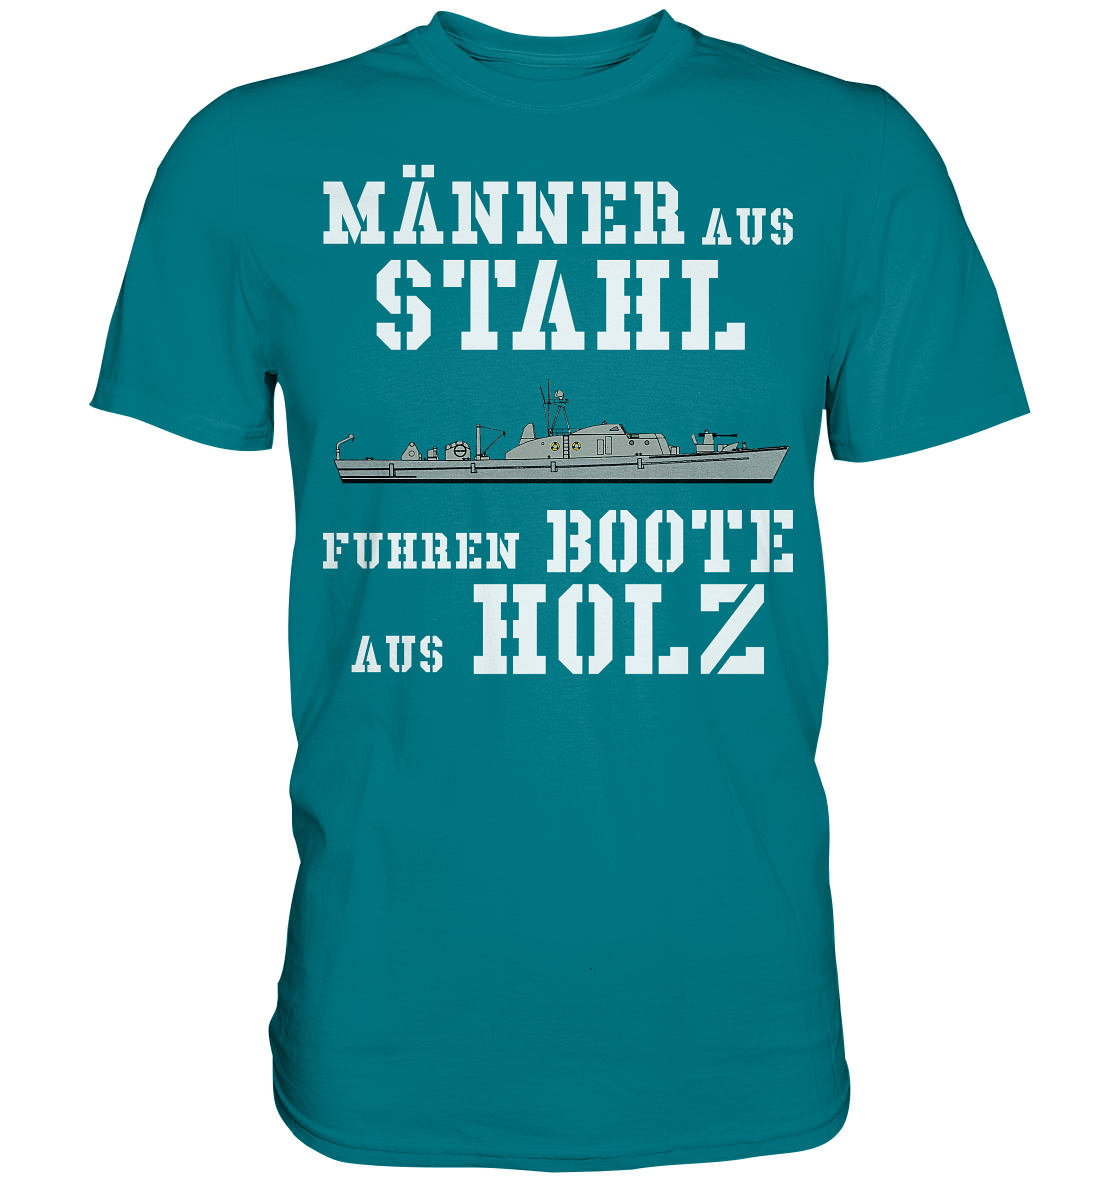 Männer aus Stahl...  SM-Boot SCHÜTZE-Klasse - Premium Shirt